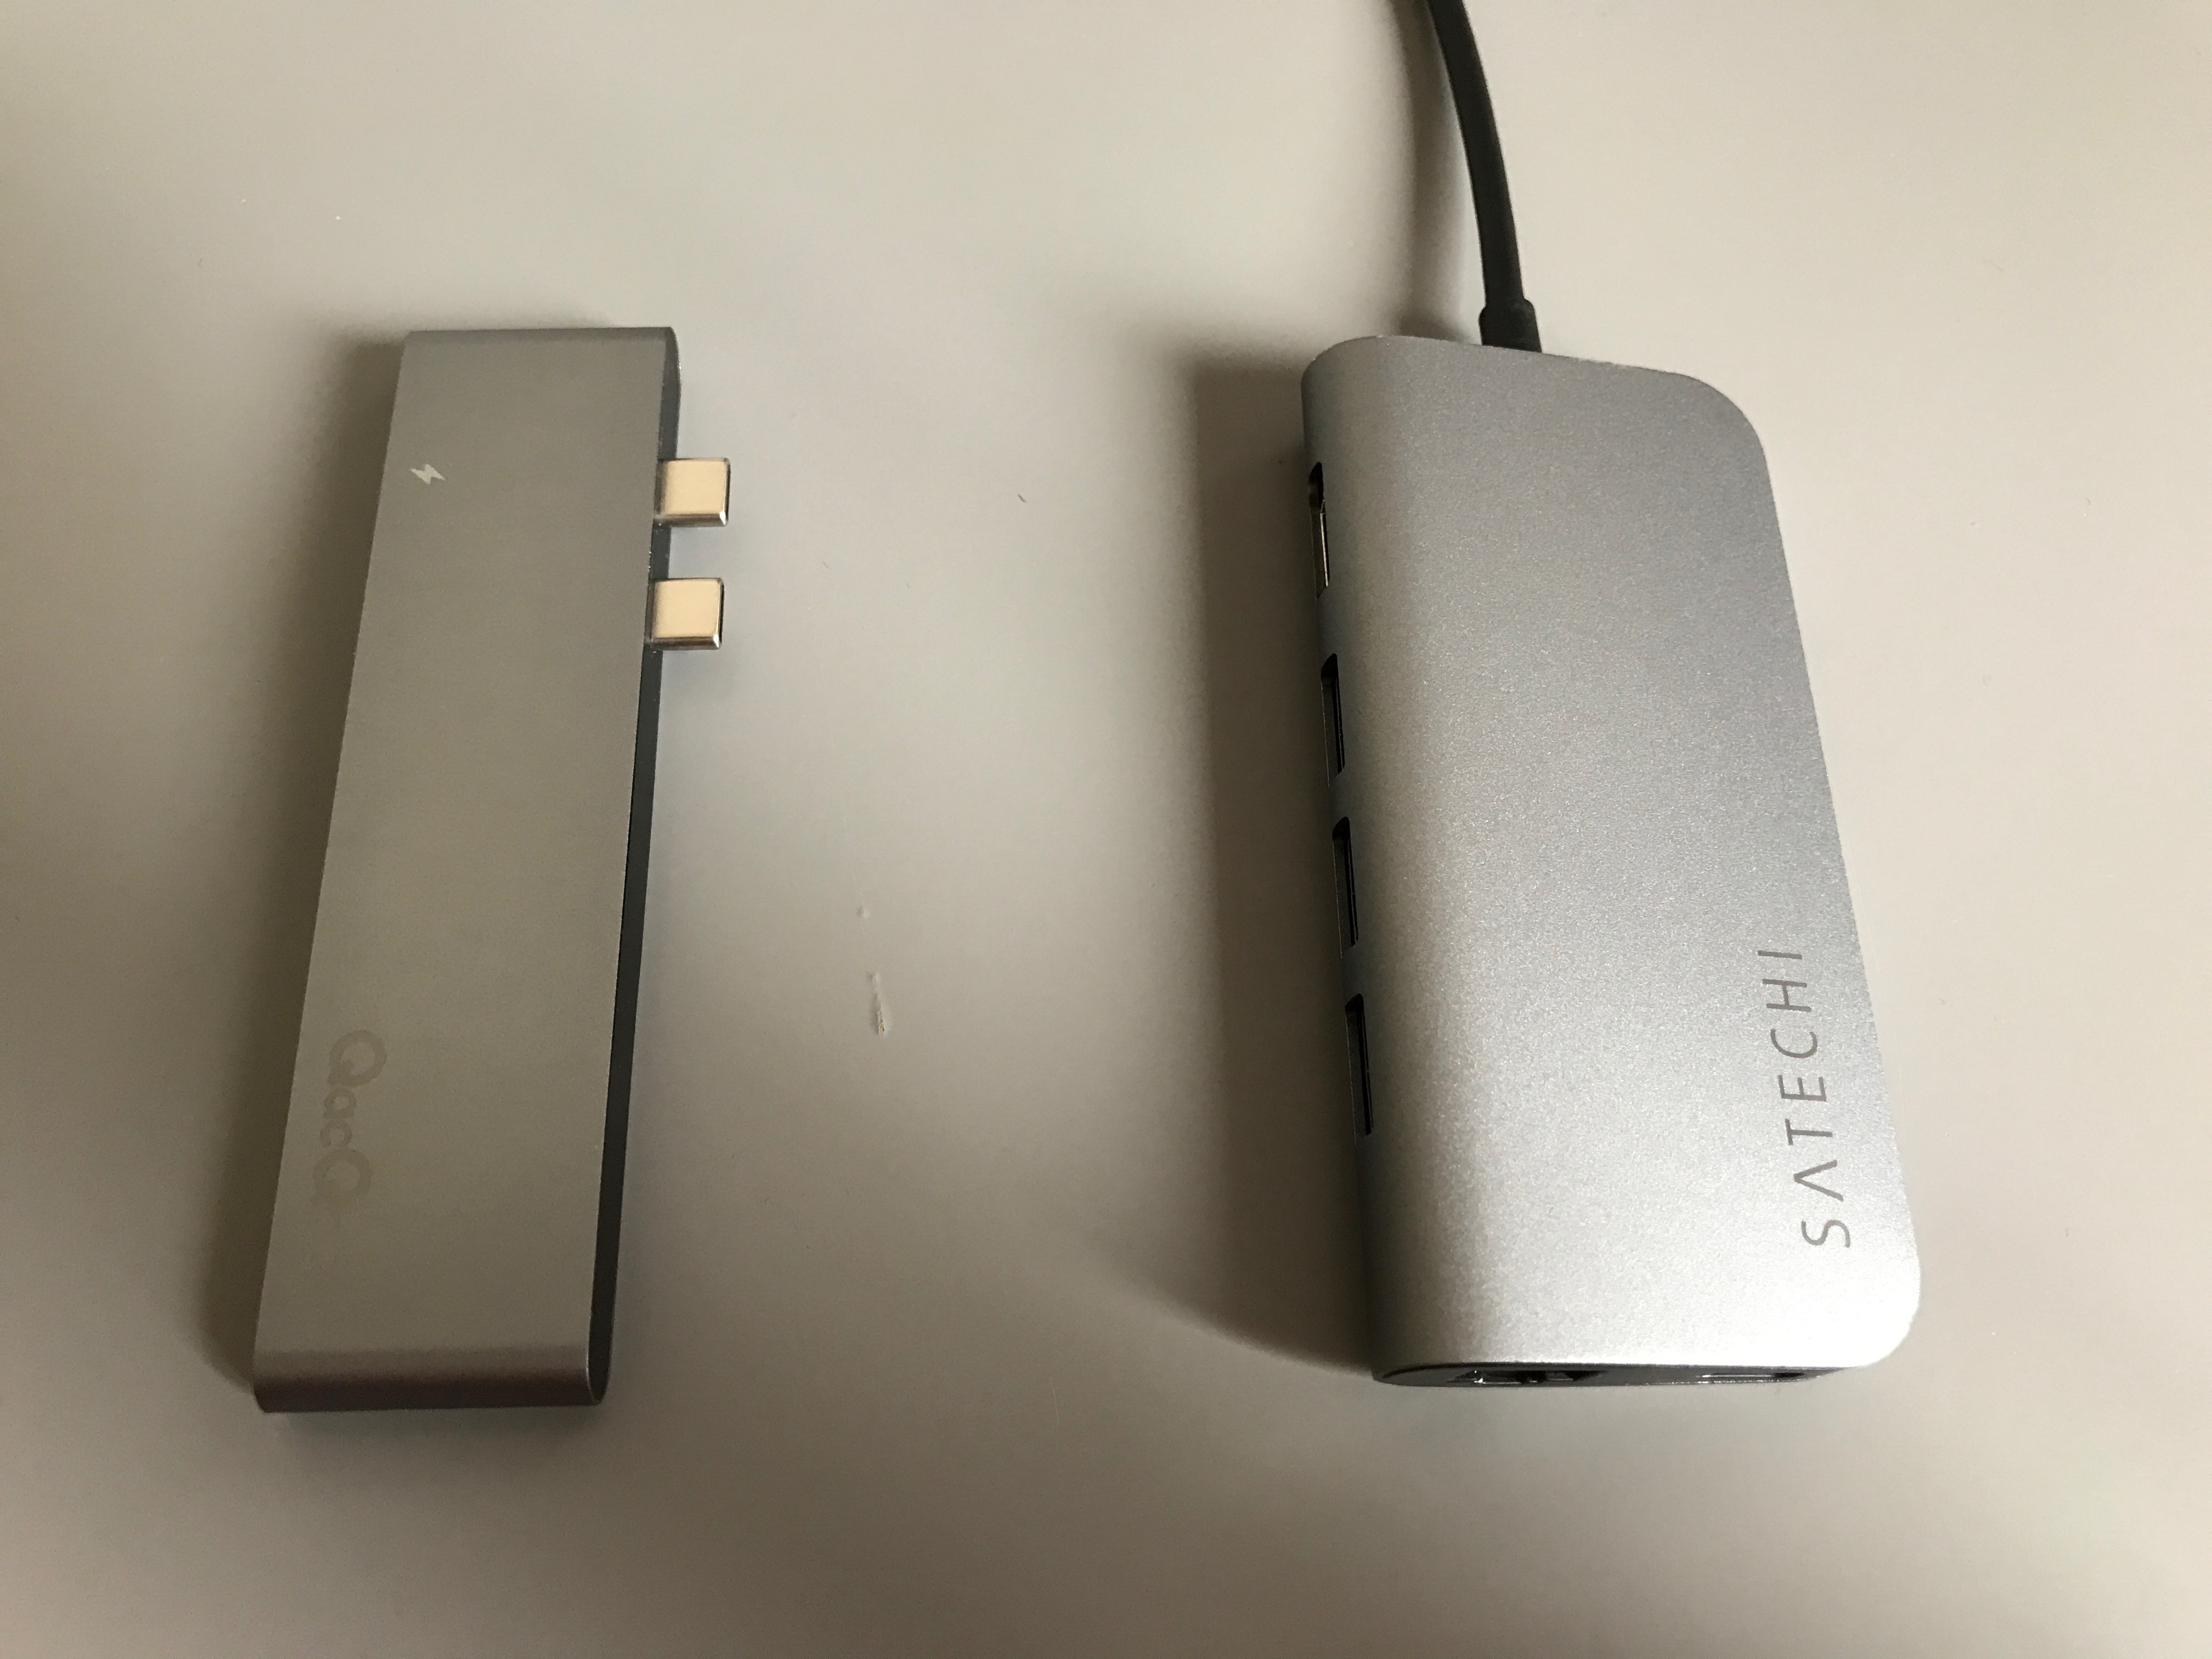 Satechi's New USB-C Hub Has A Slot For An M.2 SATA Drive